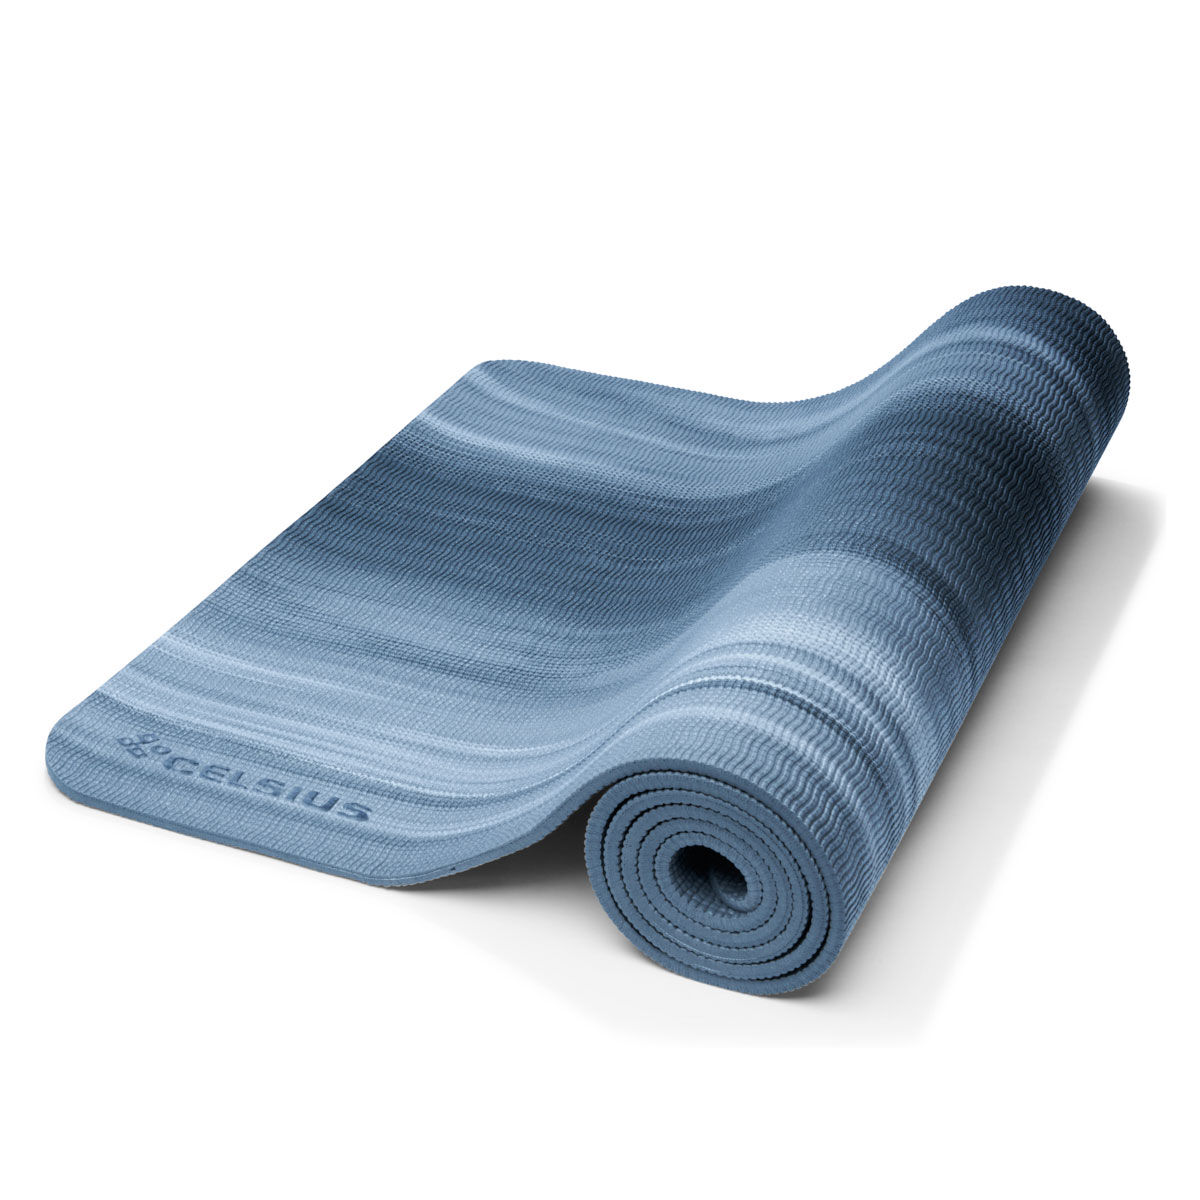 Gaiam Yoga mat and towel set, Exercise Equipment, City of Toronto